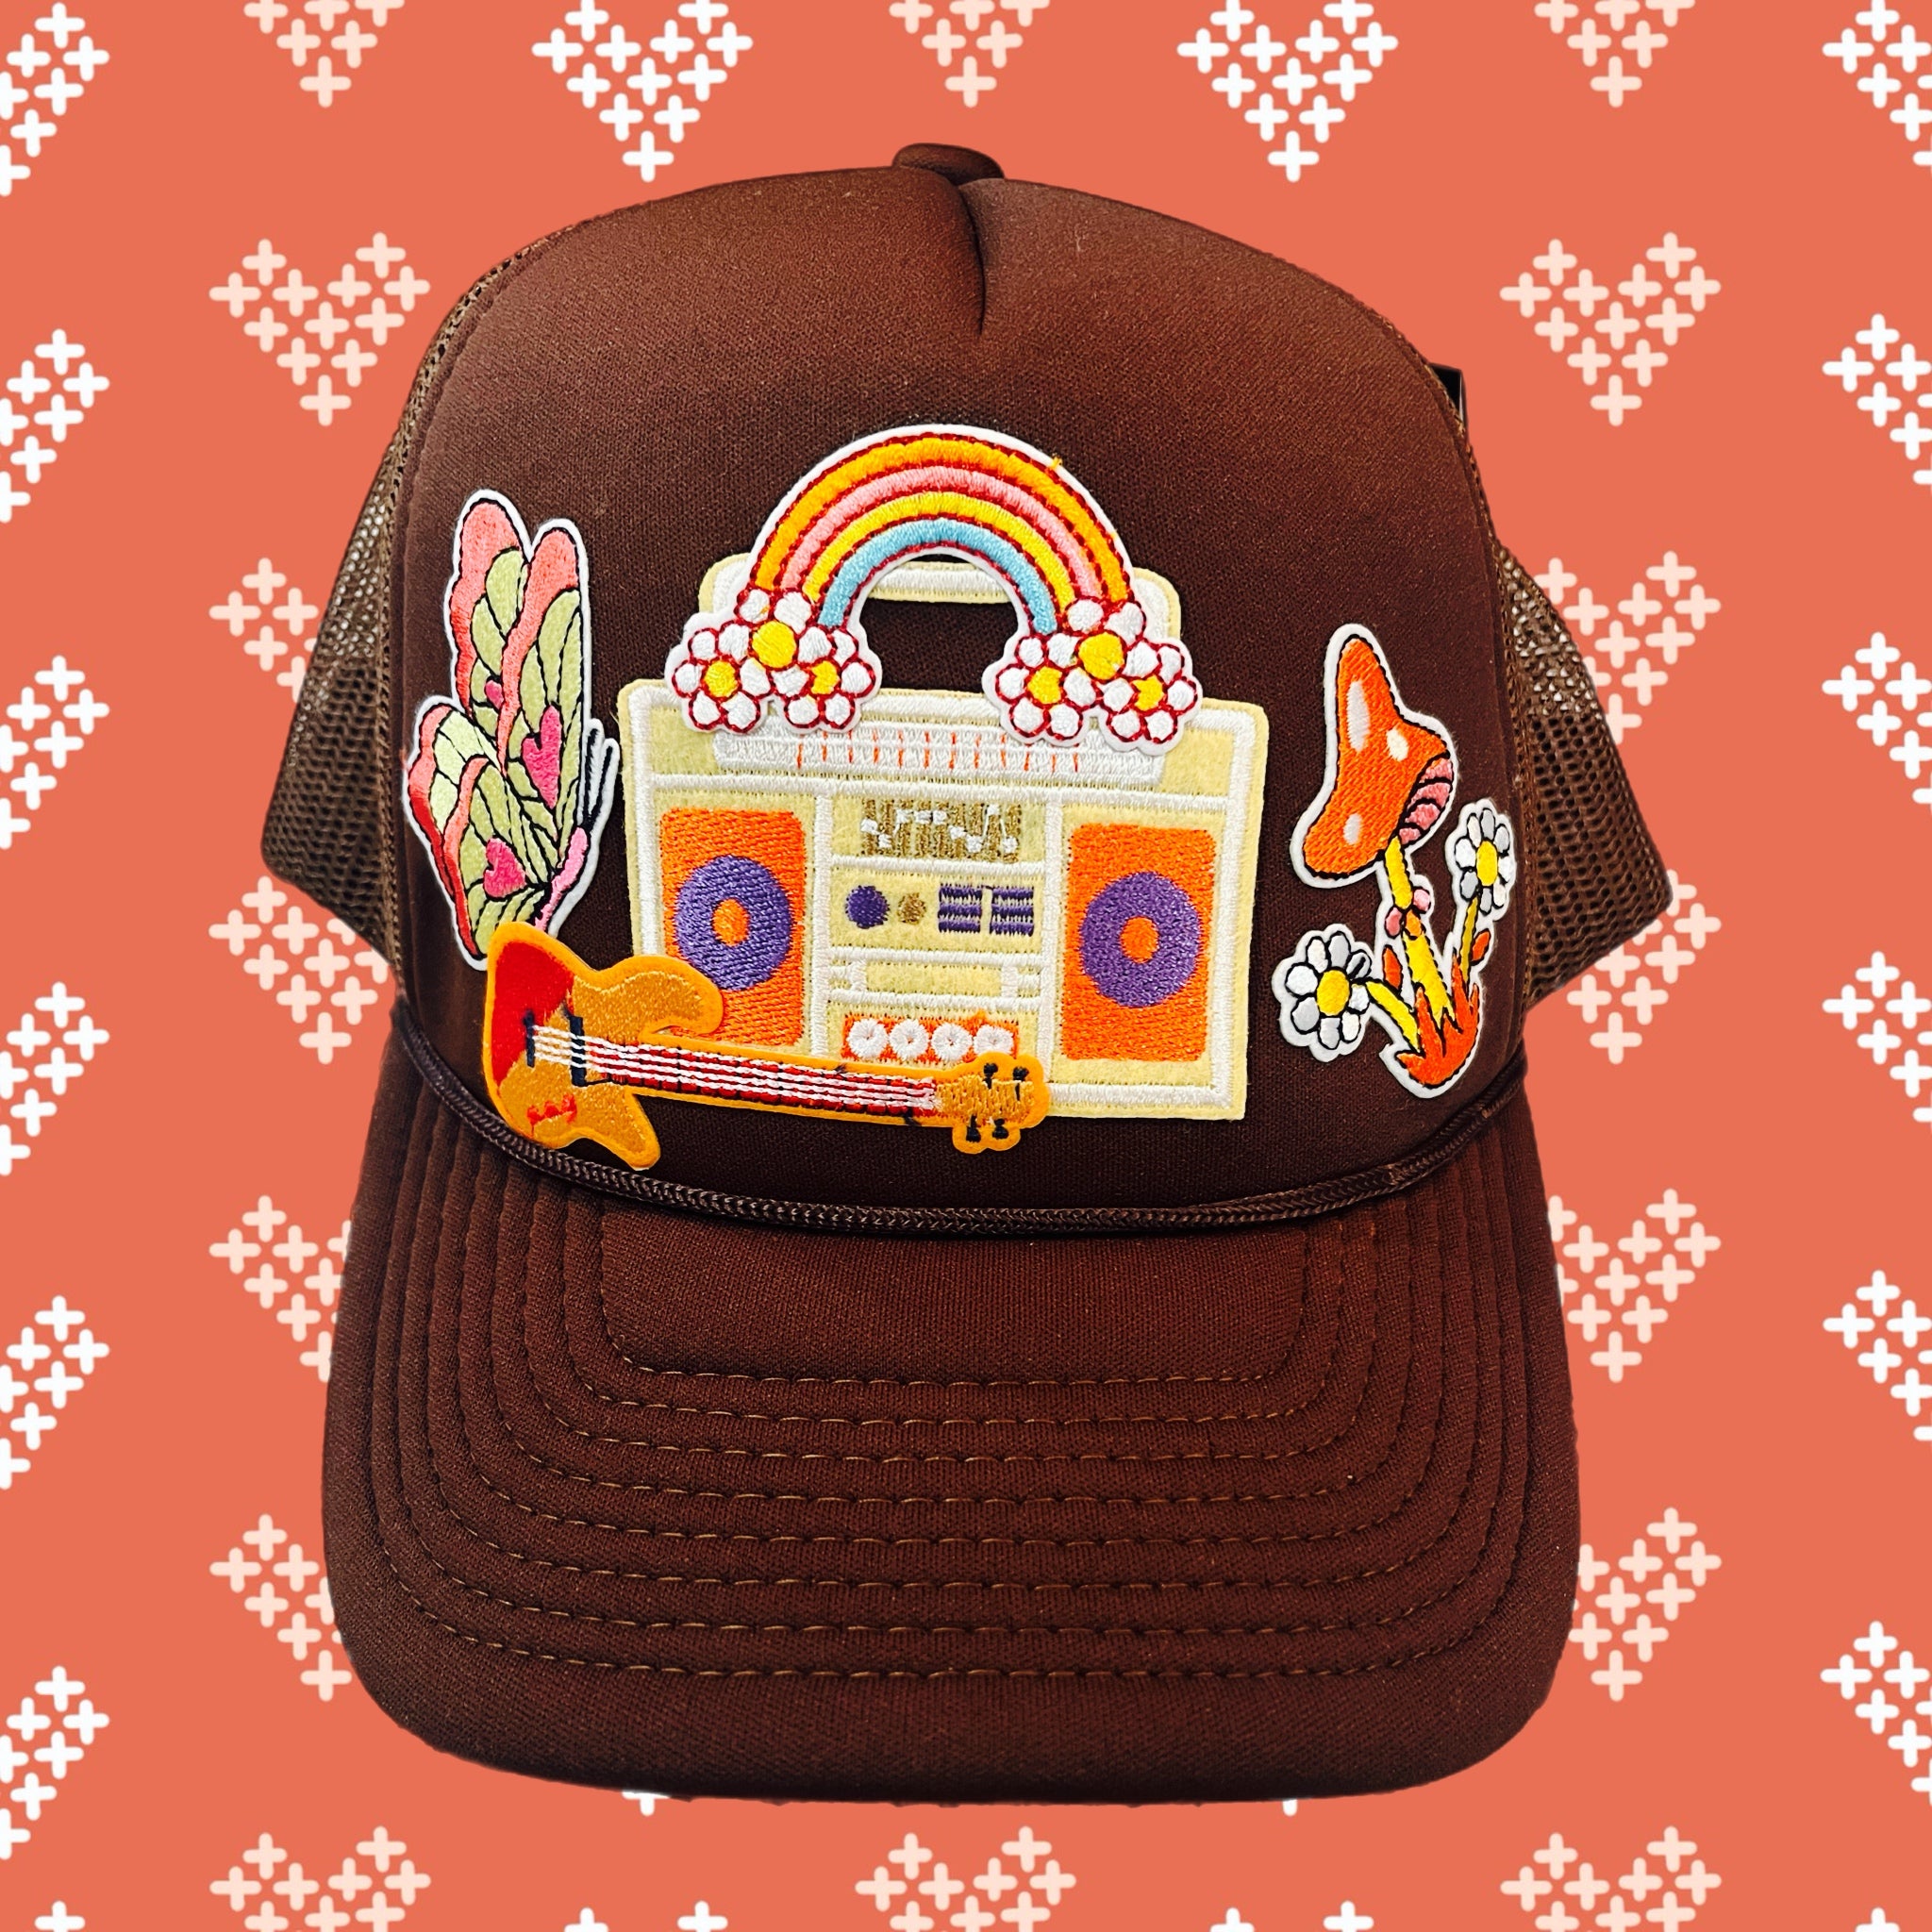 Retro Hippy Trucker Hat